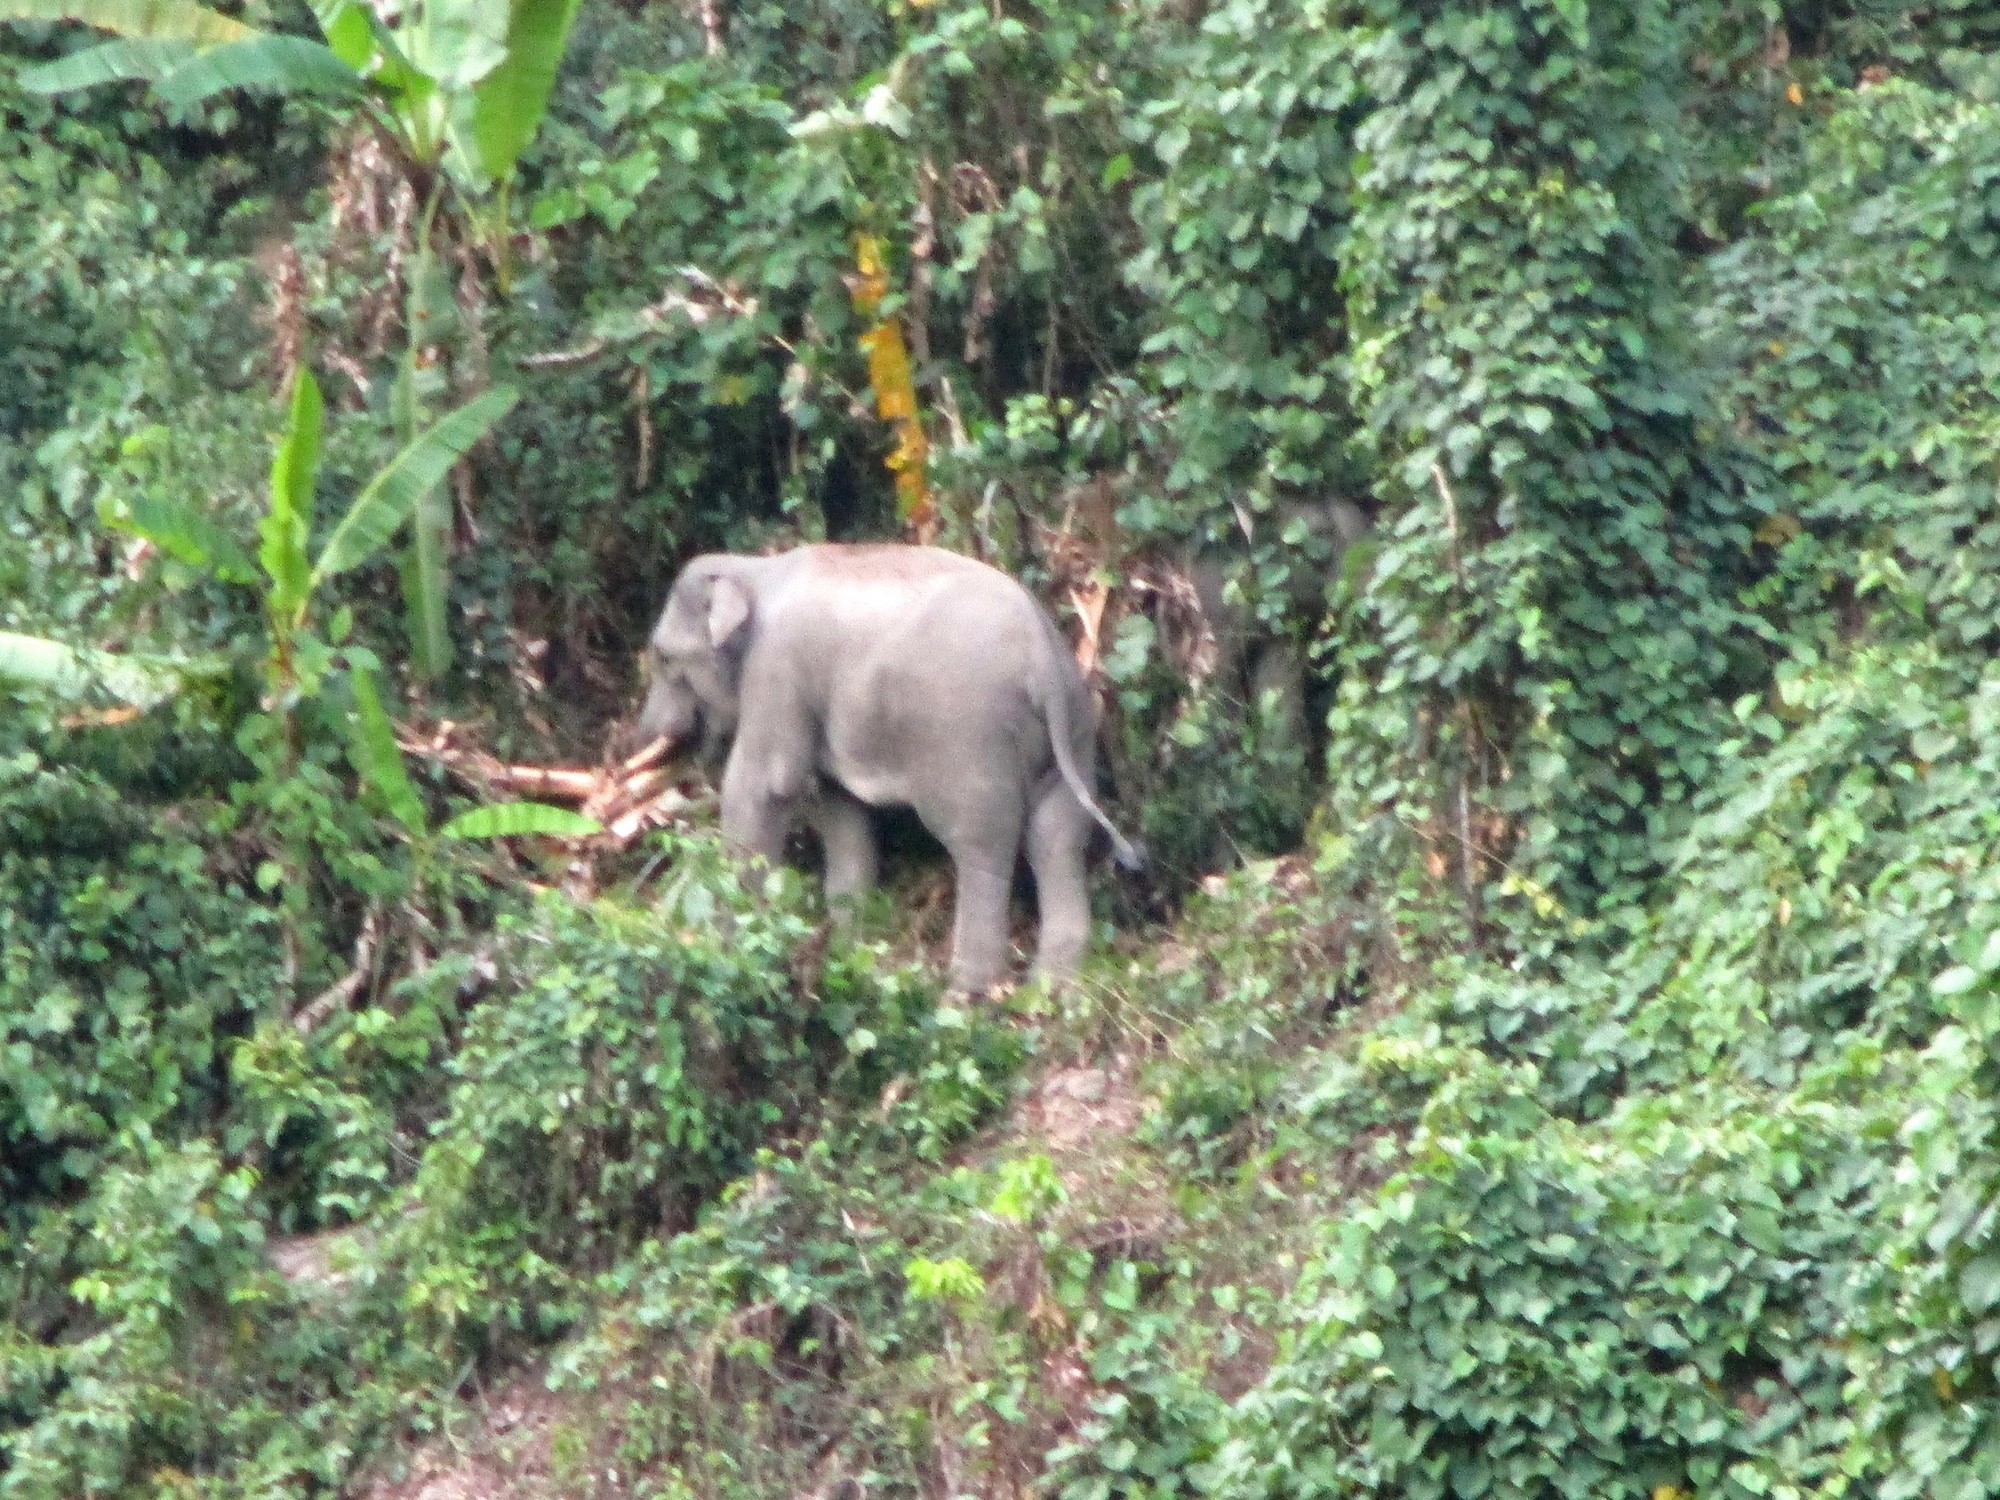 A friend to wild elephants in Vietnam